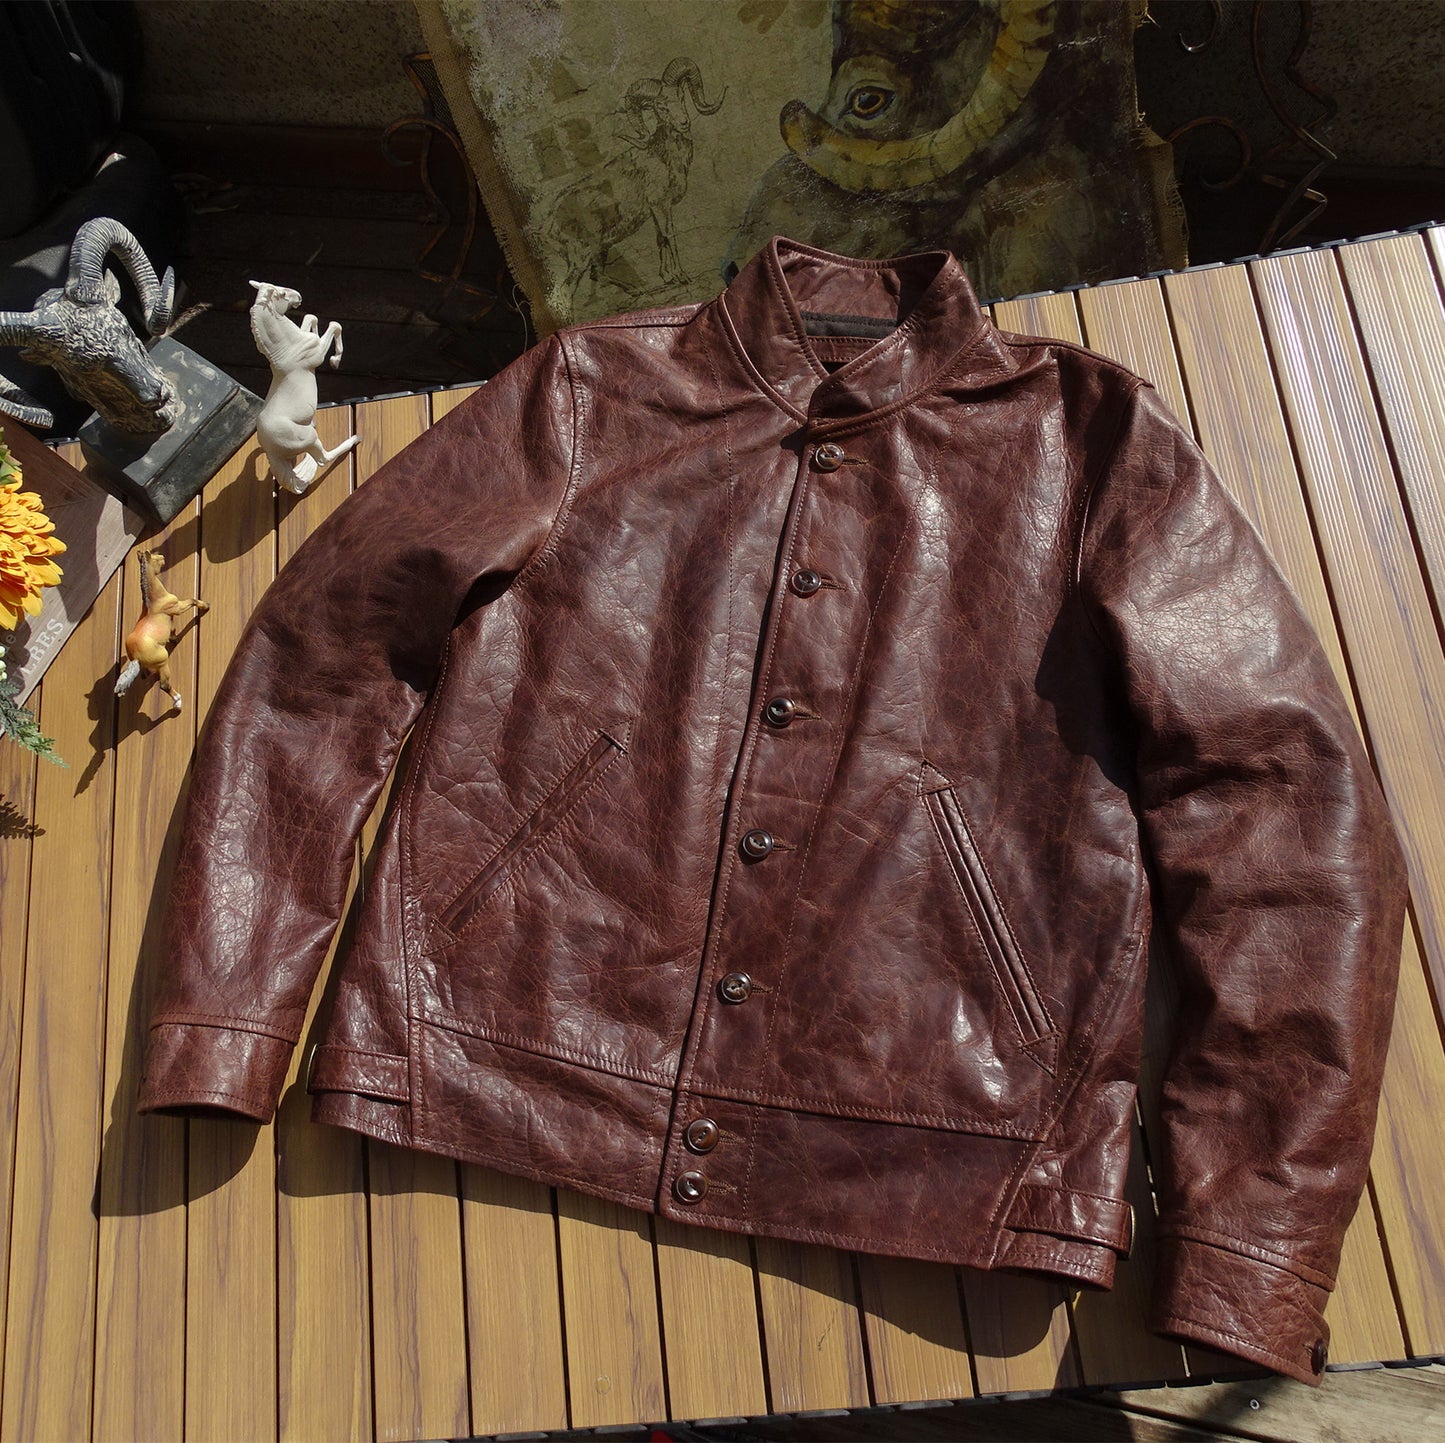 Men's Cossack Leather Jacket